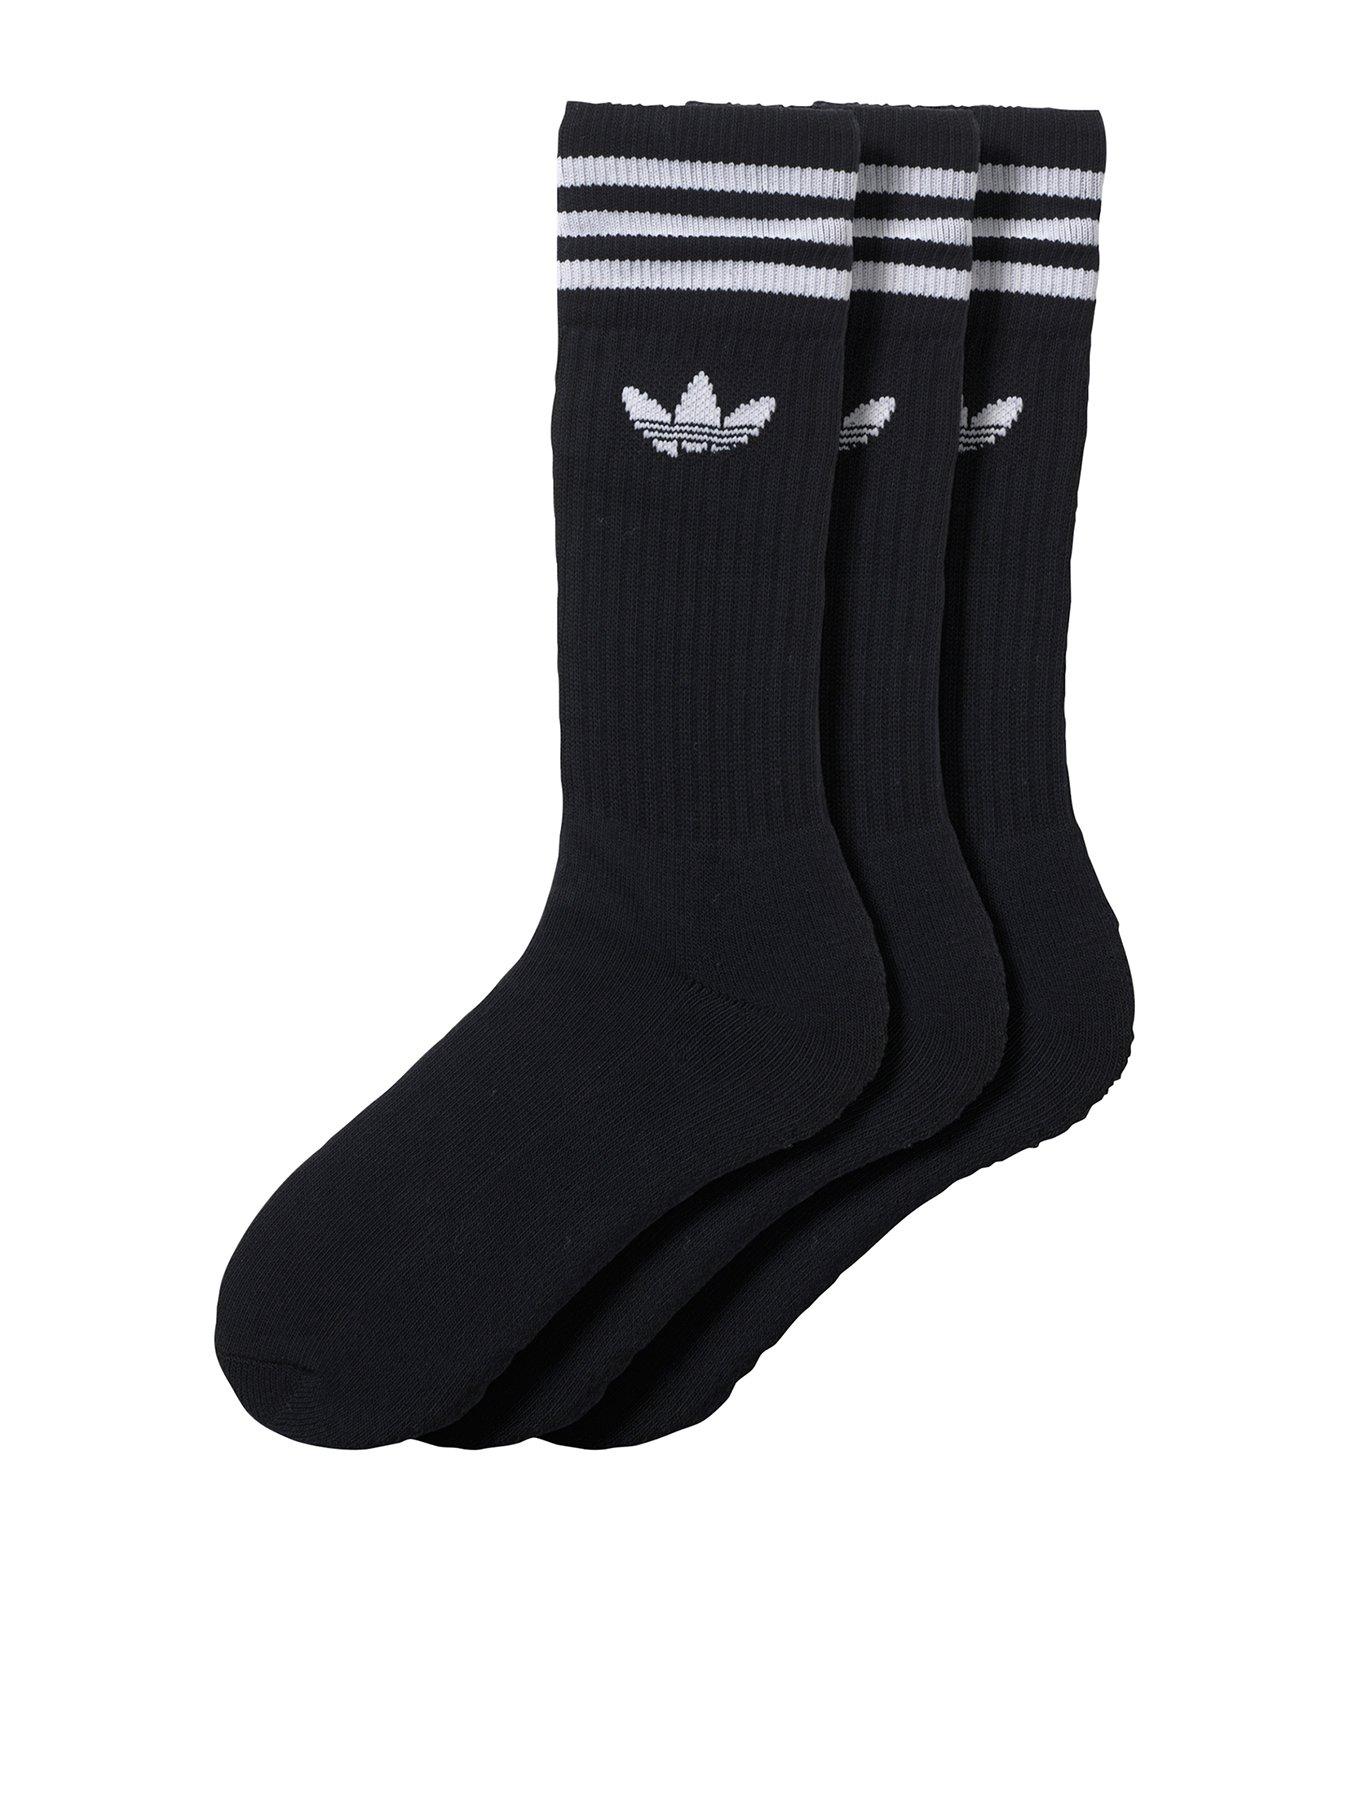 mens adidas socks uk